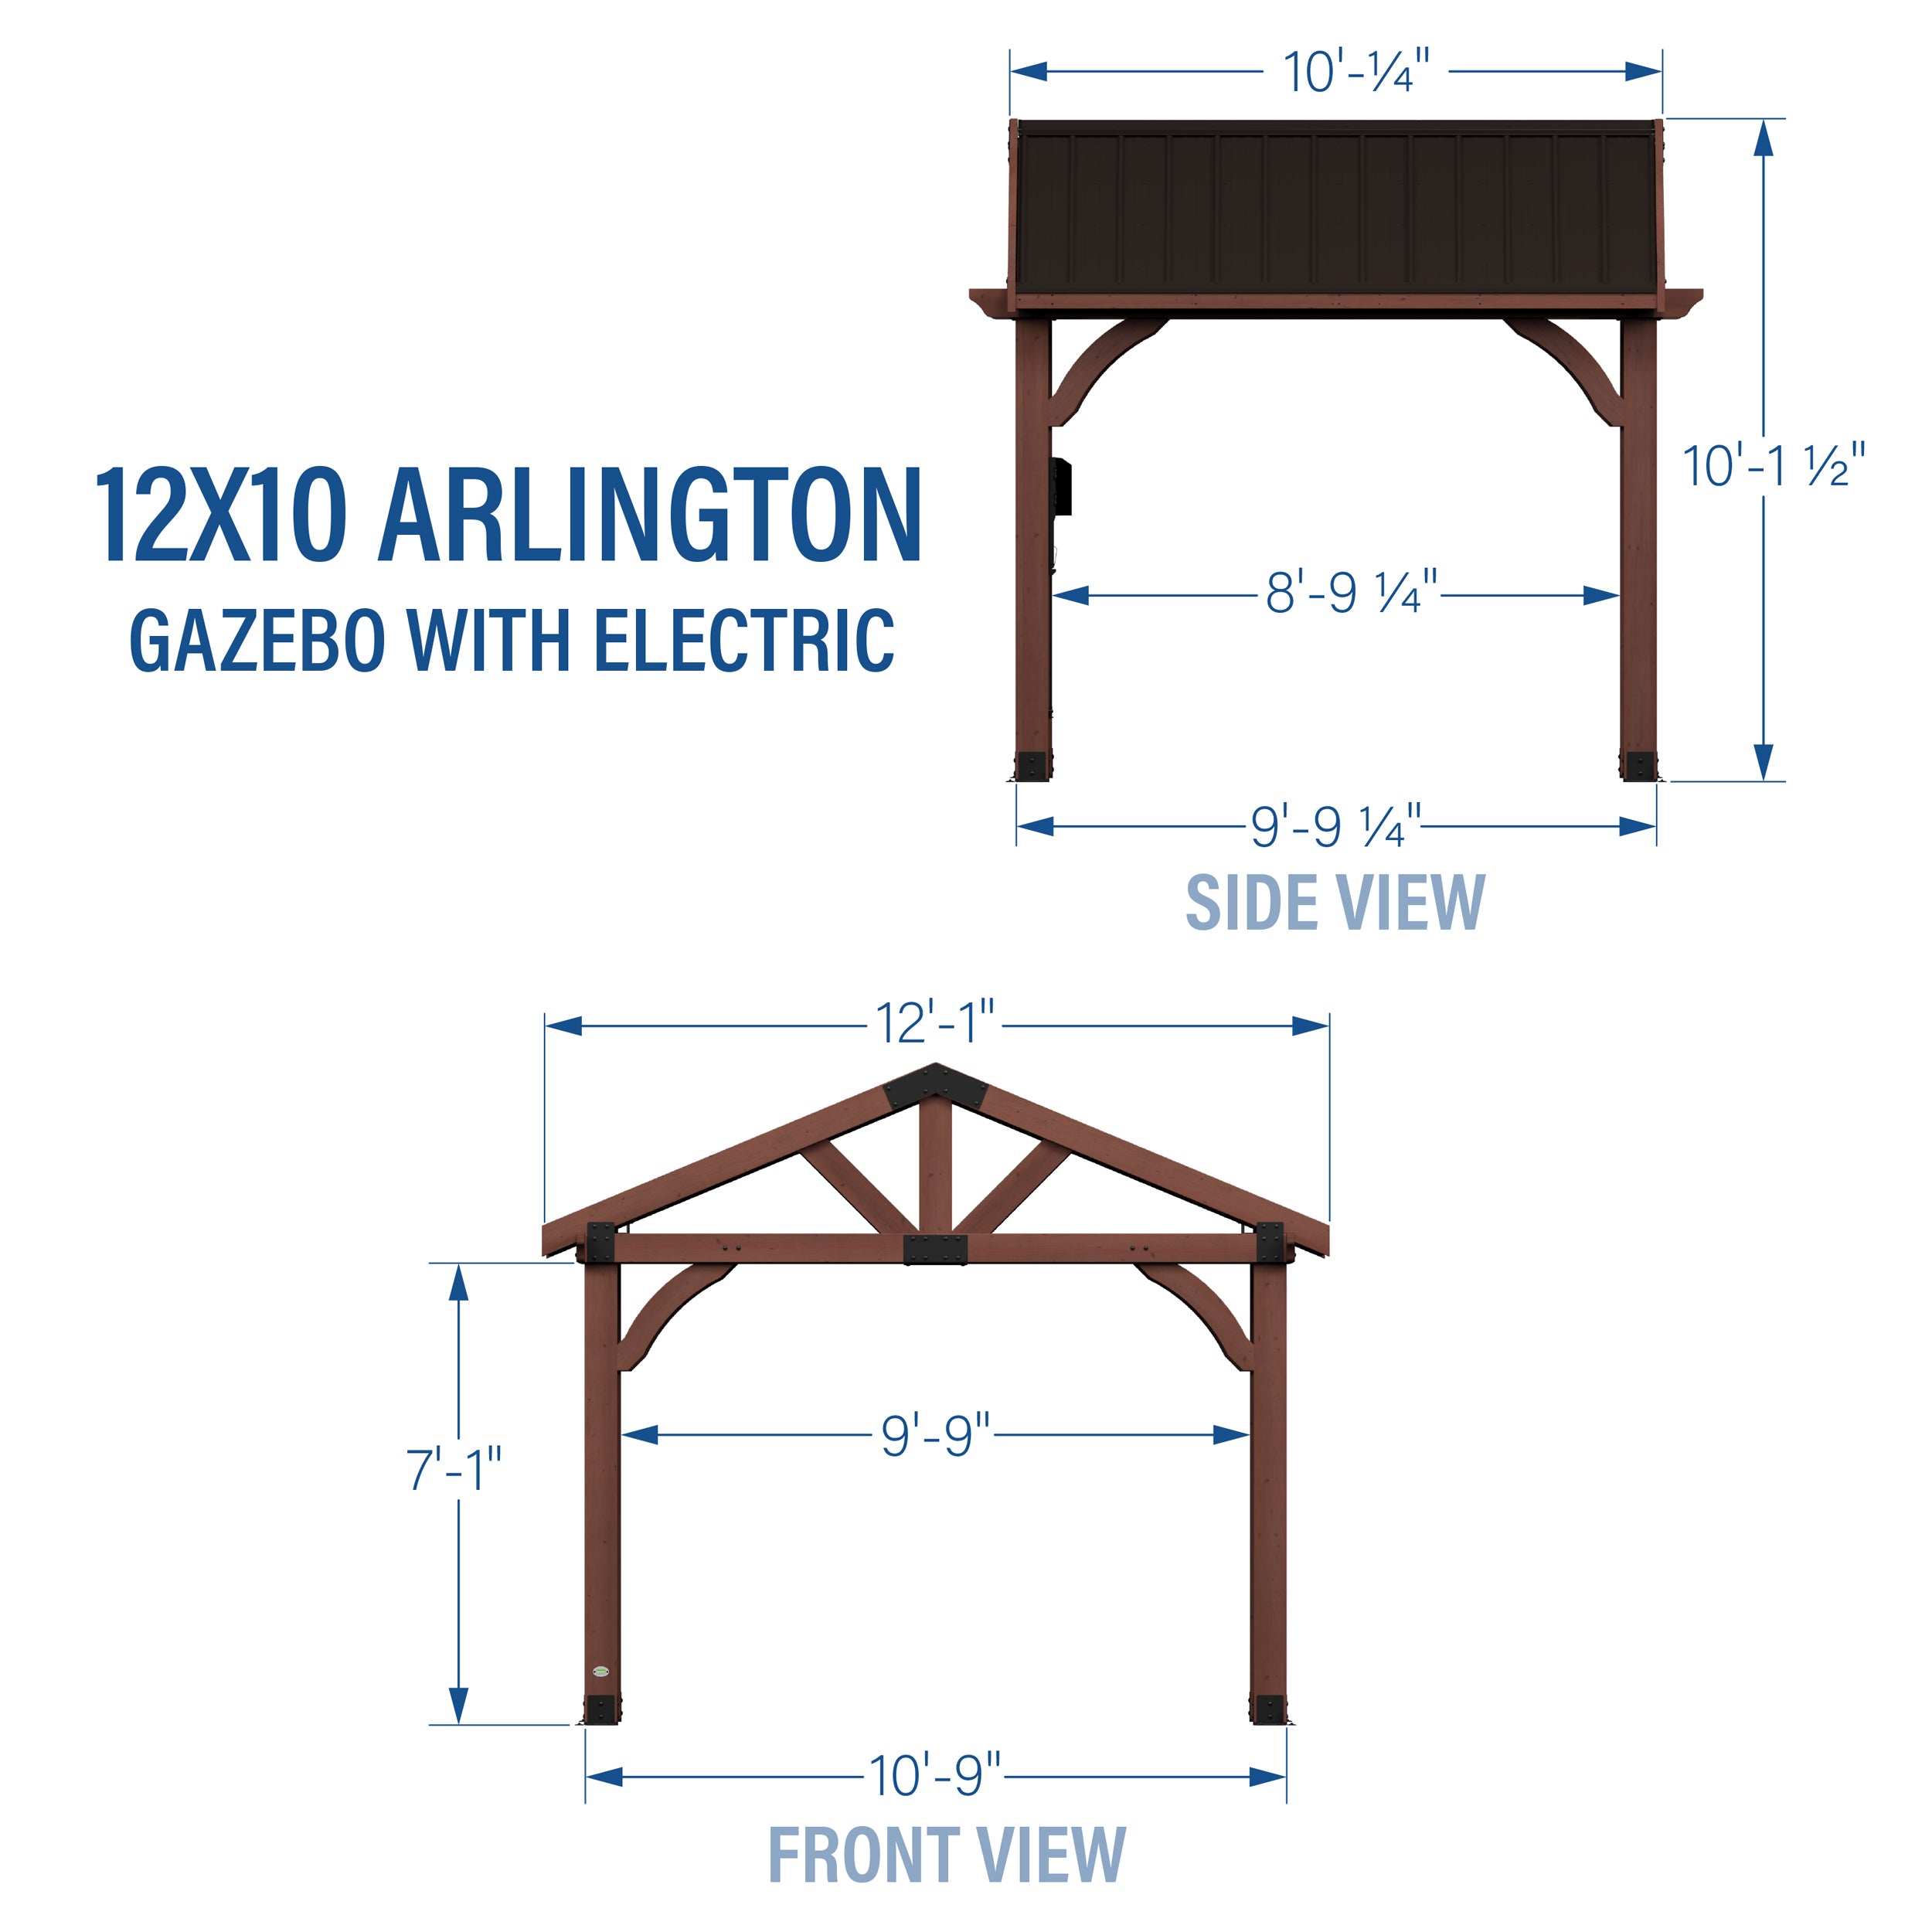 12x10 Arlington Gazebo with Electric